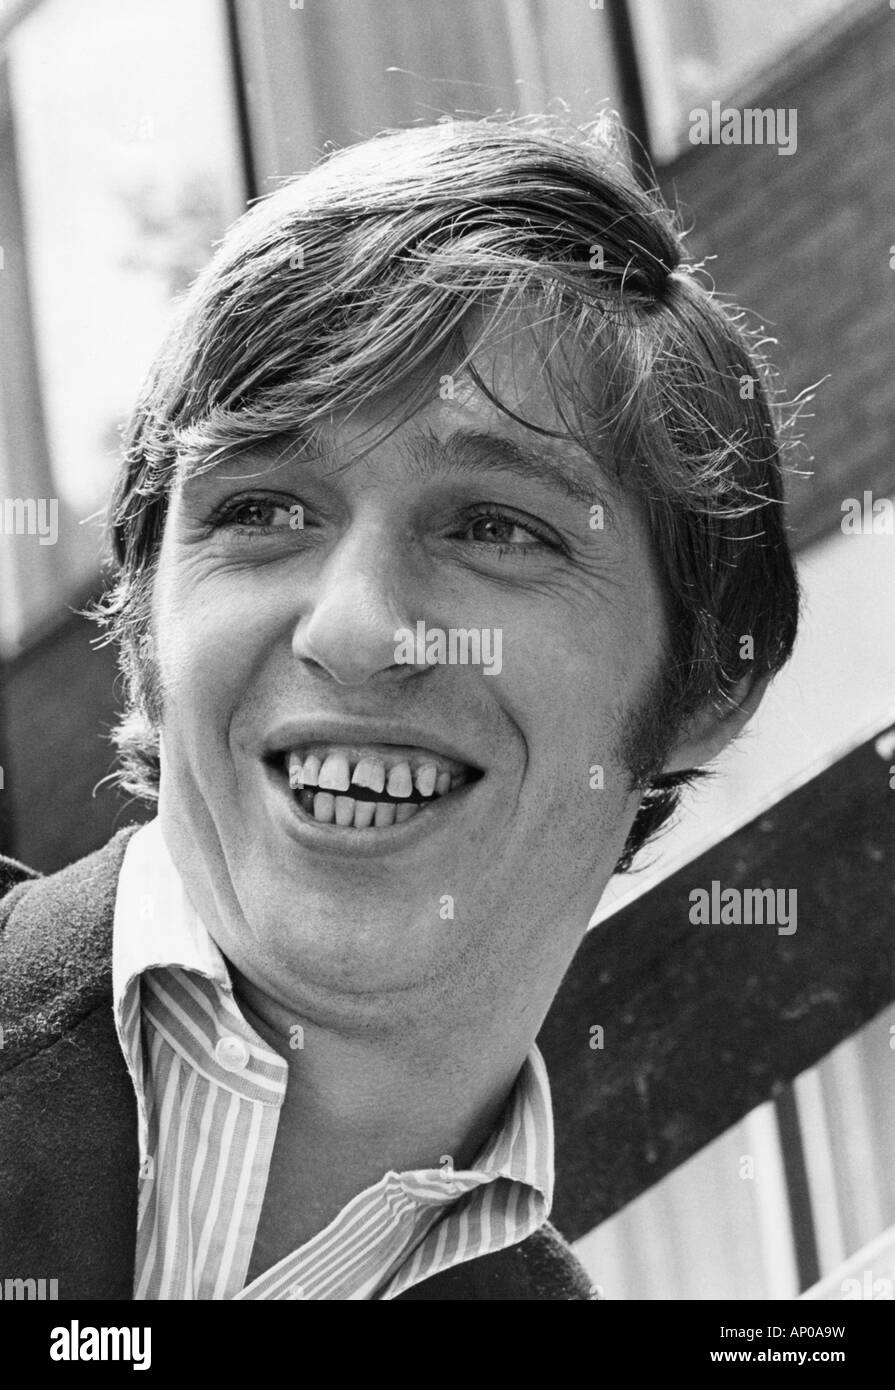 GEORGIE FAME - britischer R&B-Musiker im Juni 1966. Foto: Tony Gale Stockfoto